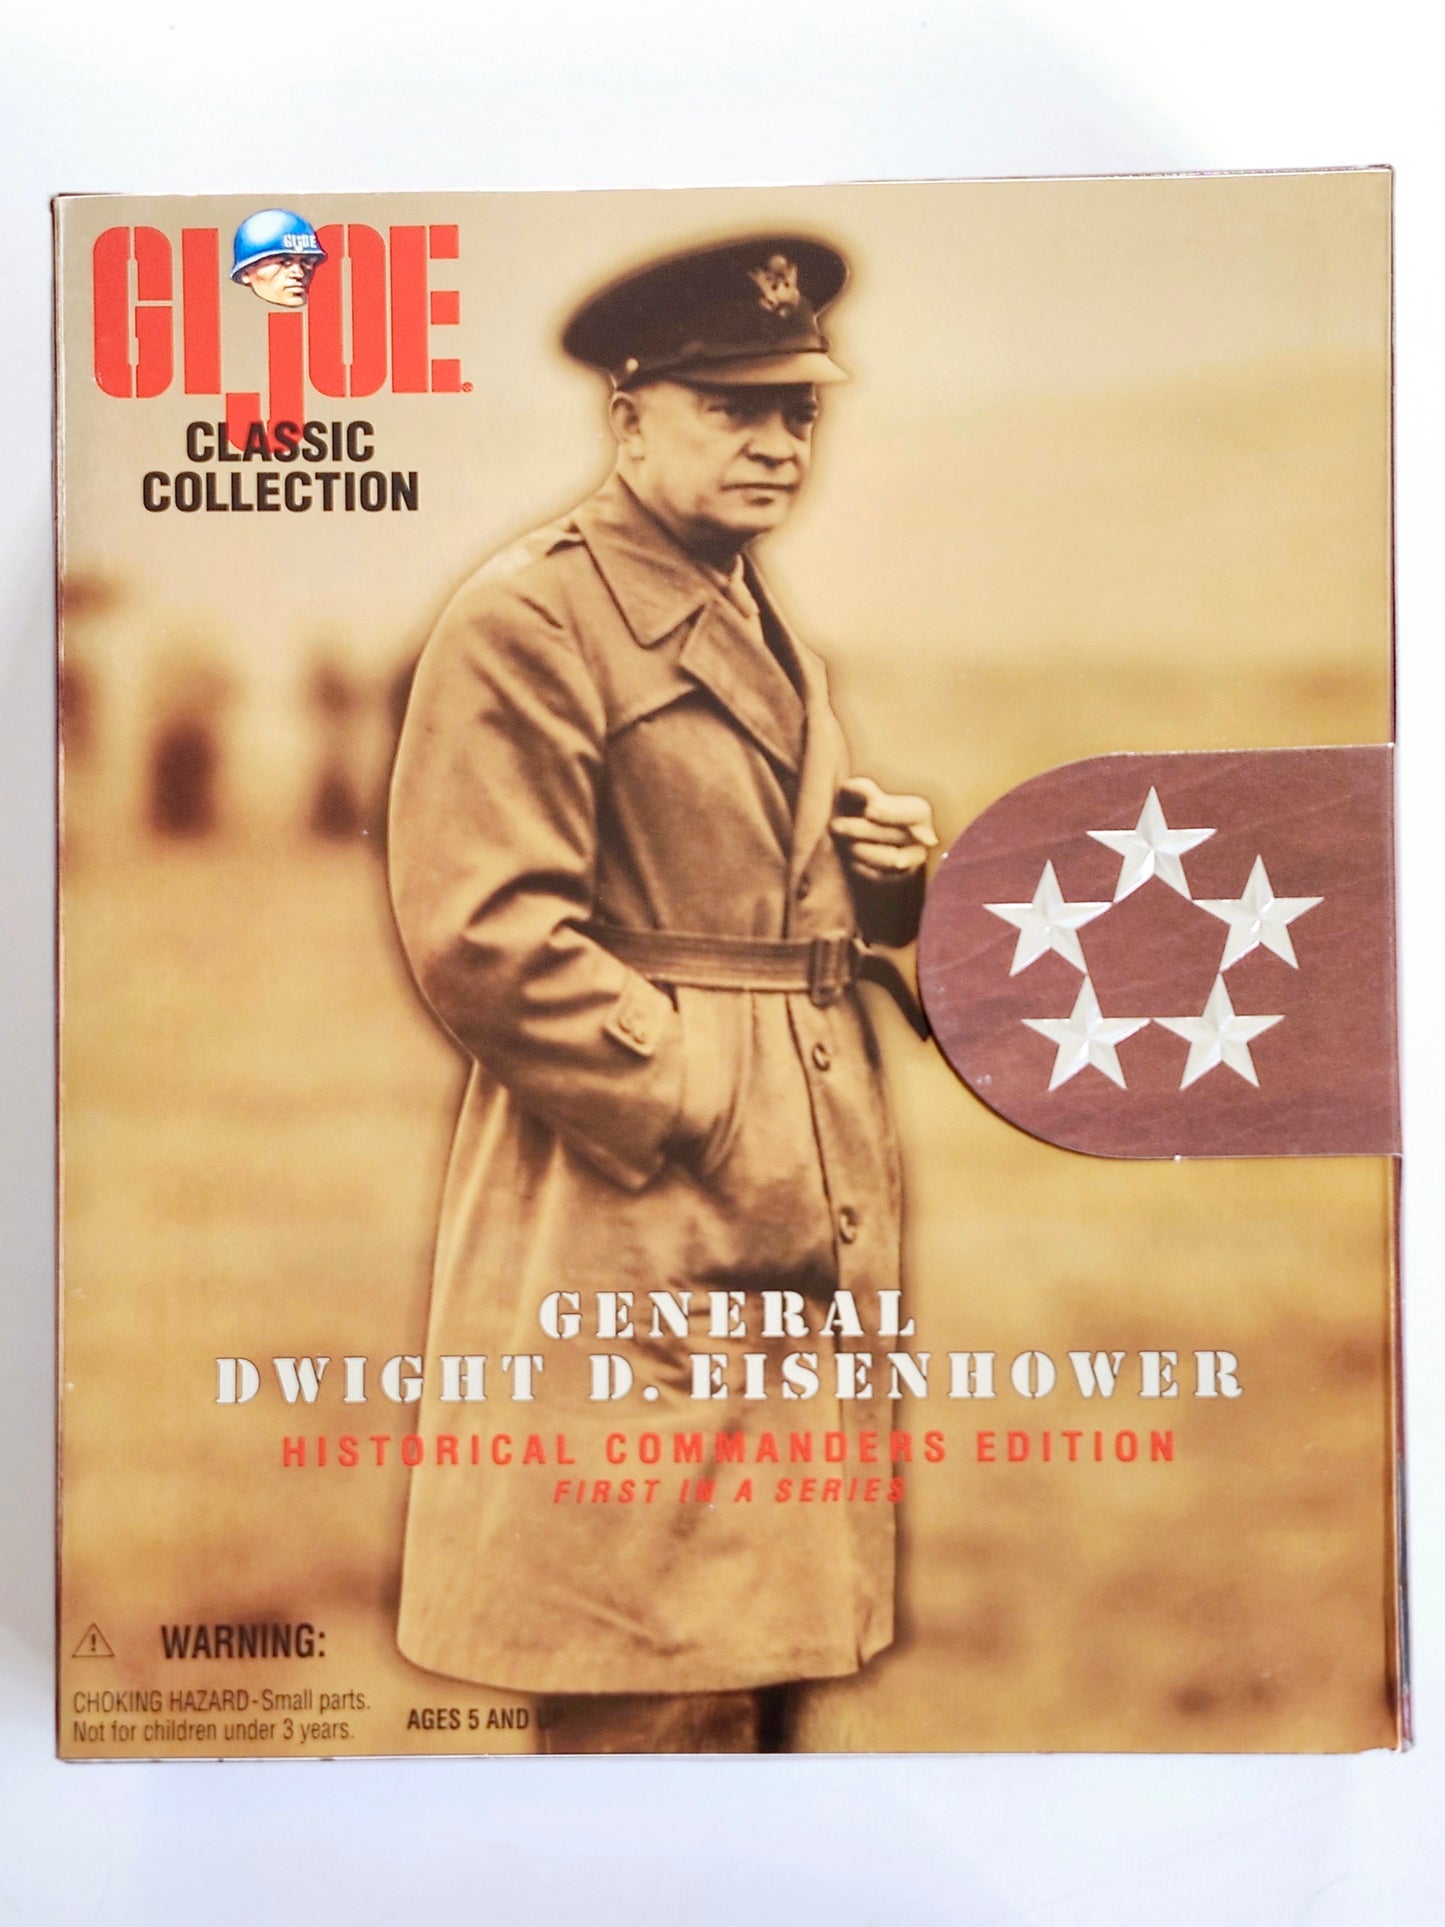 G.I. Joe Historical Commanders Edition General Dwight D. Eisenhower 12-Inch Action Figure